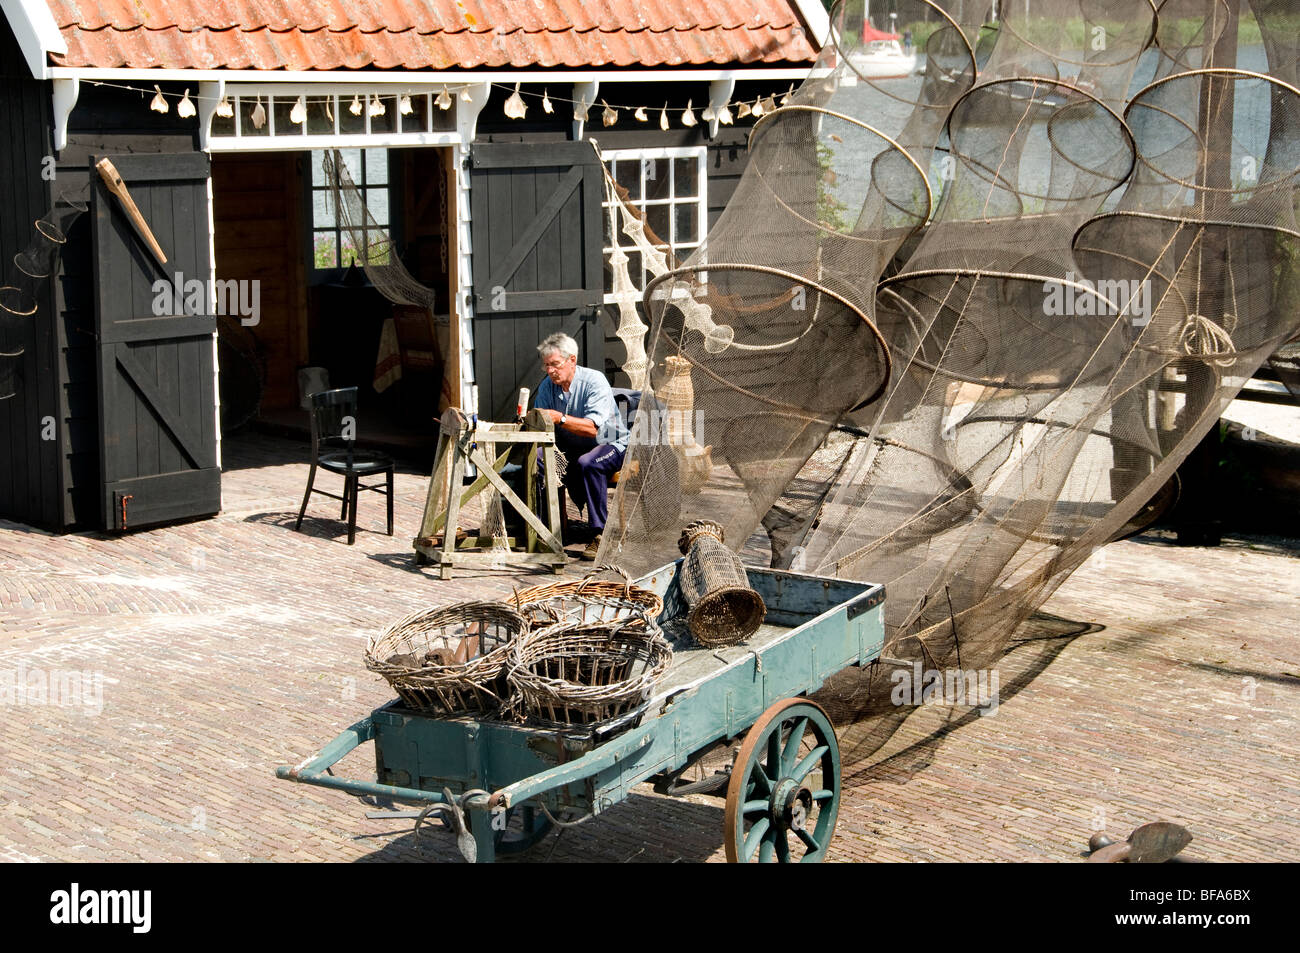 Zuiderzee Museum, Enkhuizen, Erhaltung des kulturellen Erbes - maritime Geschichte aus der alten Zuiderzee Region. Ijsselmeer, Niederlande Holland, Stockfoto